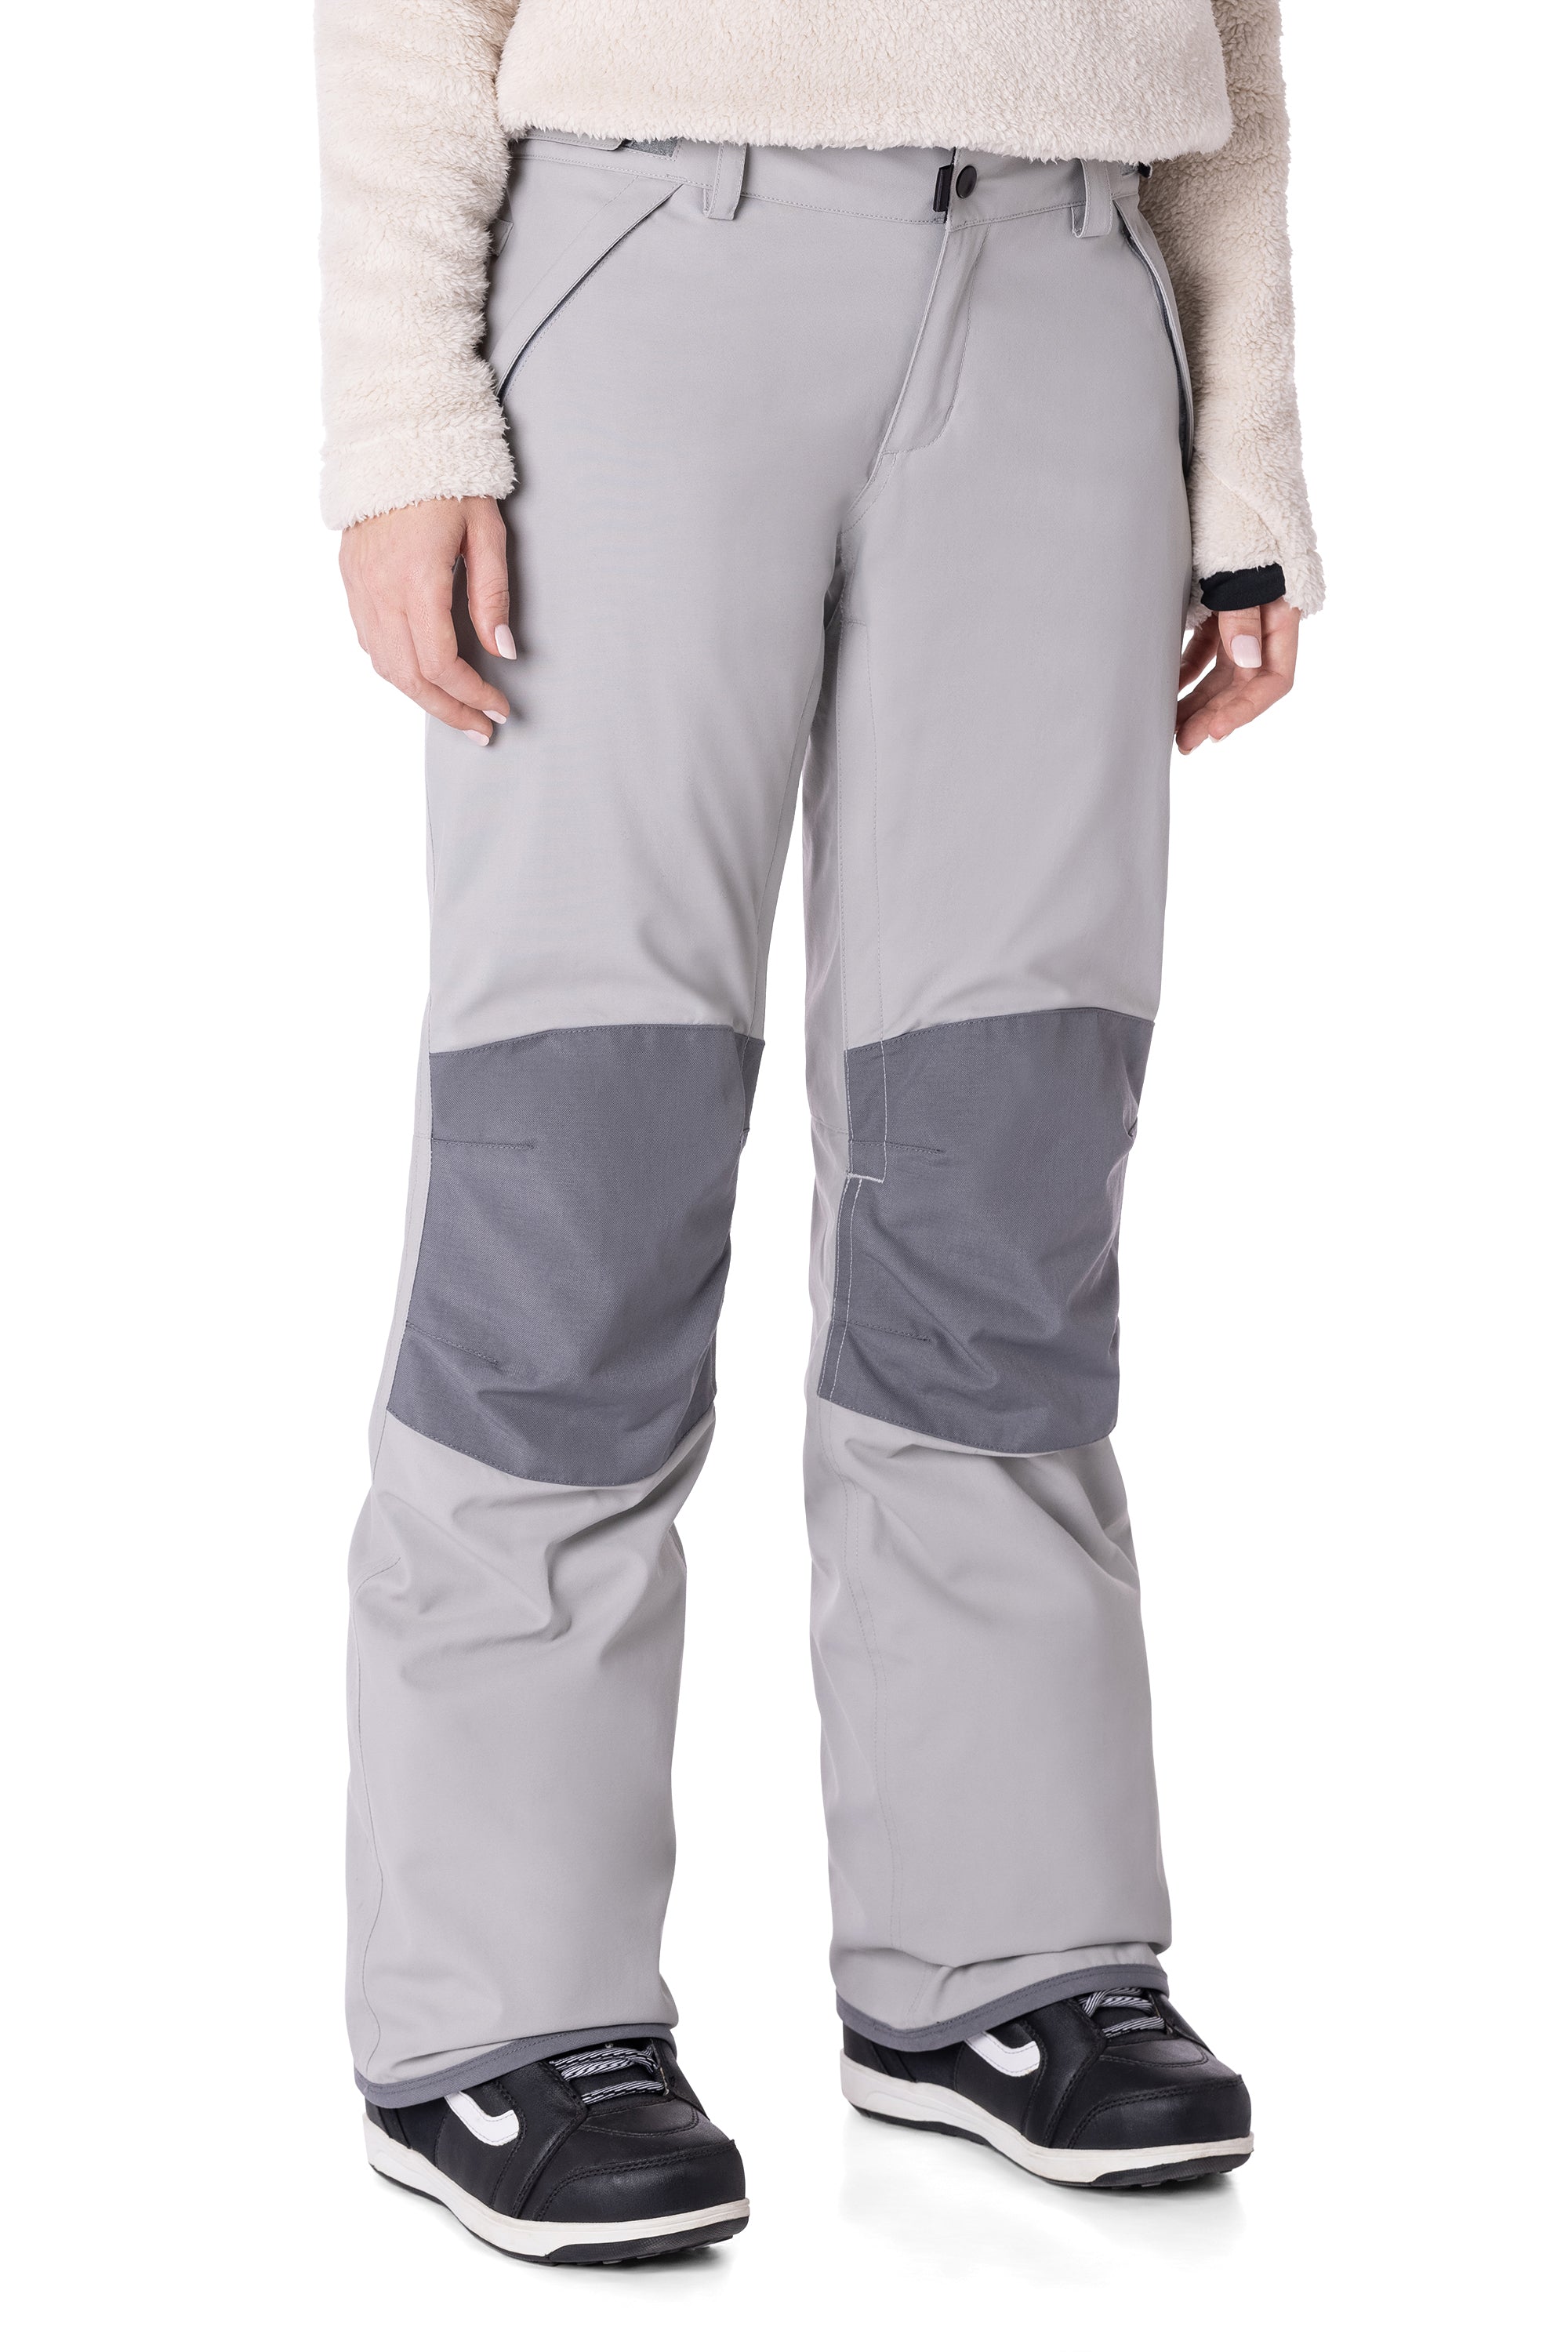 686 Women's Progression Padded Snow Pants - 88 Gear